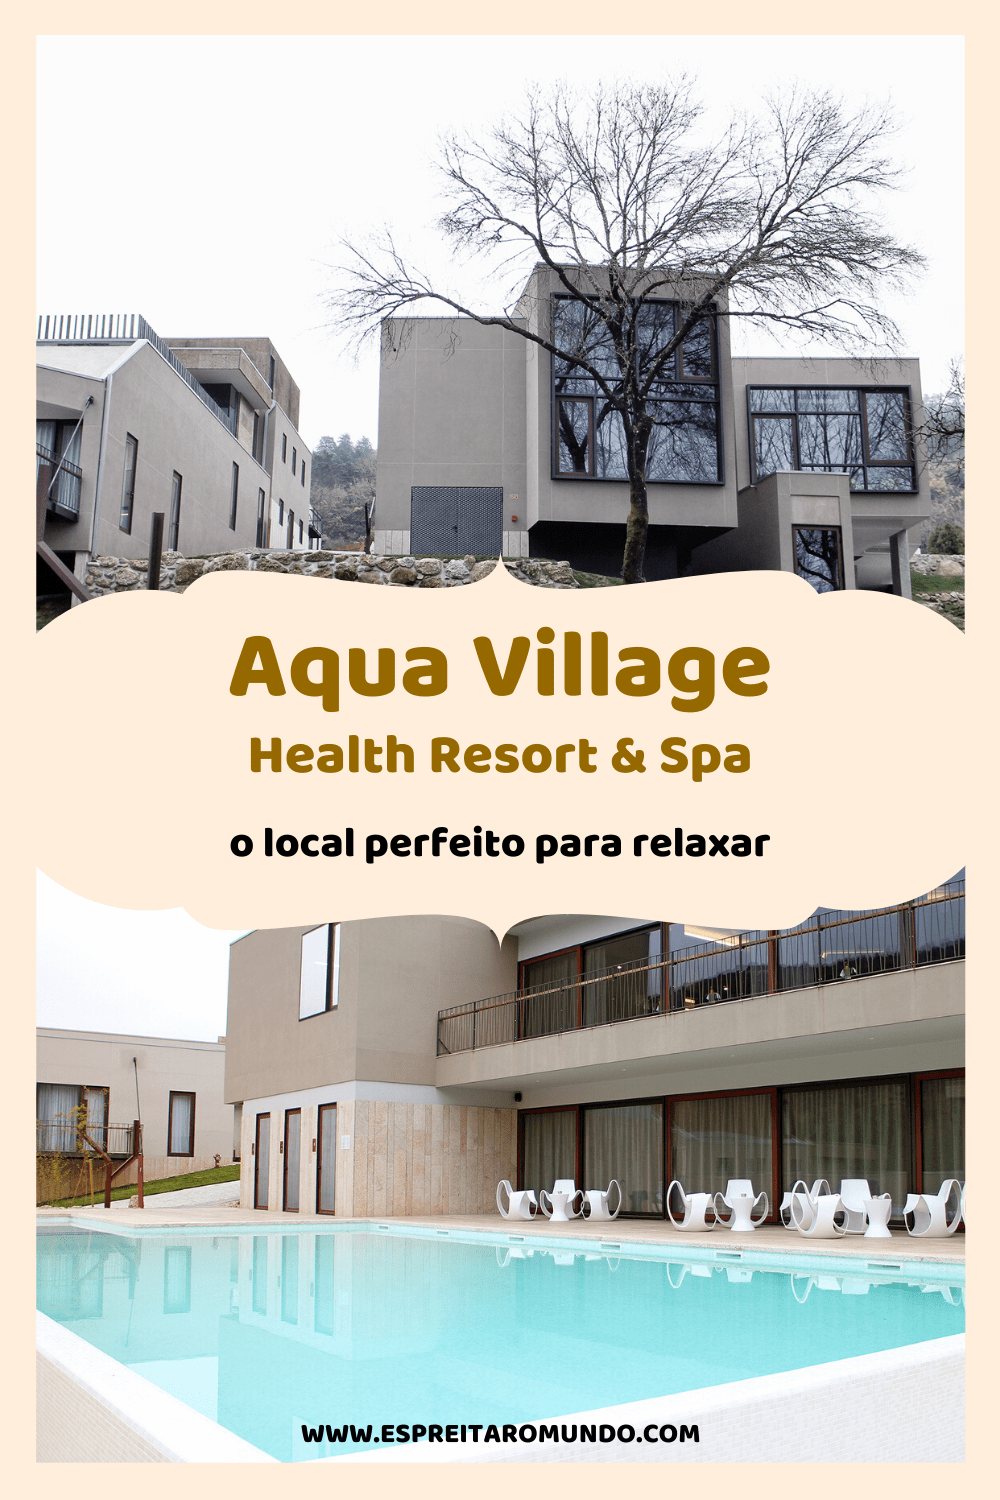 Aqua Village Health Resort & Spa imagem do Pinterest